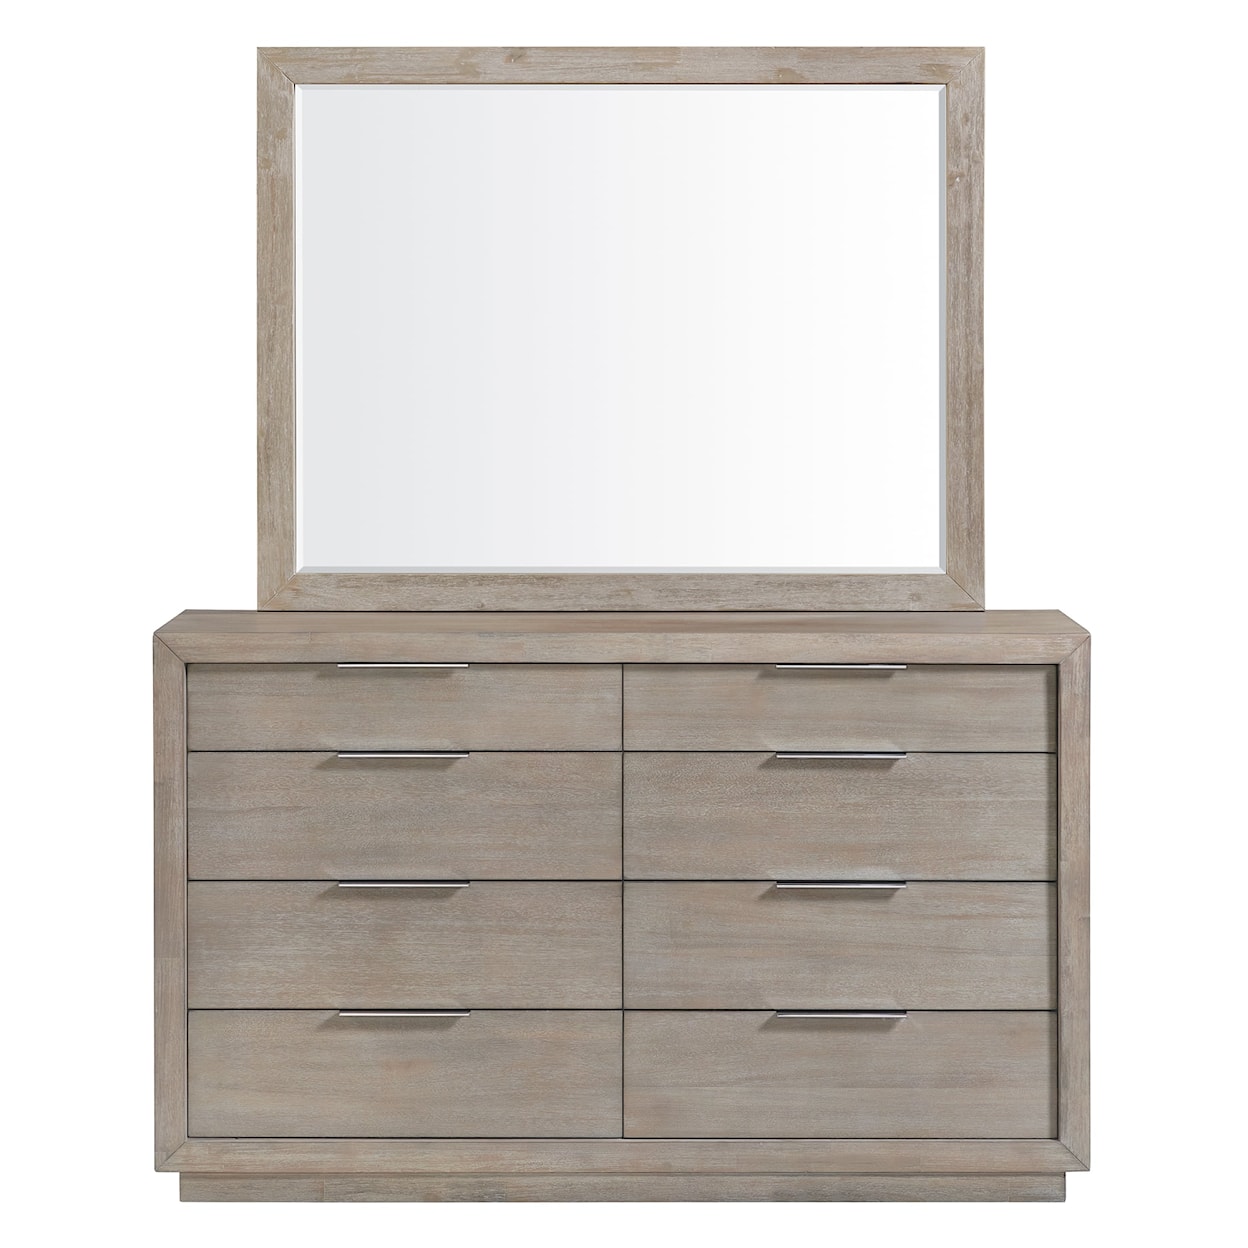 Elements International Arcadia Dresser and Mirror Set